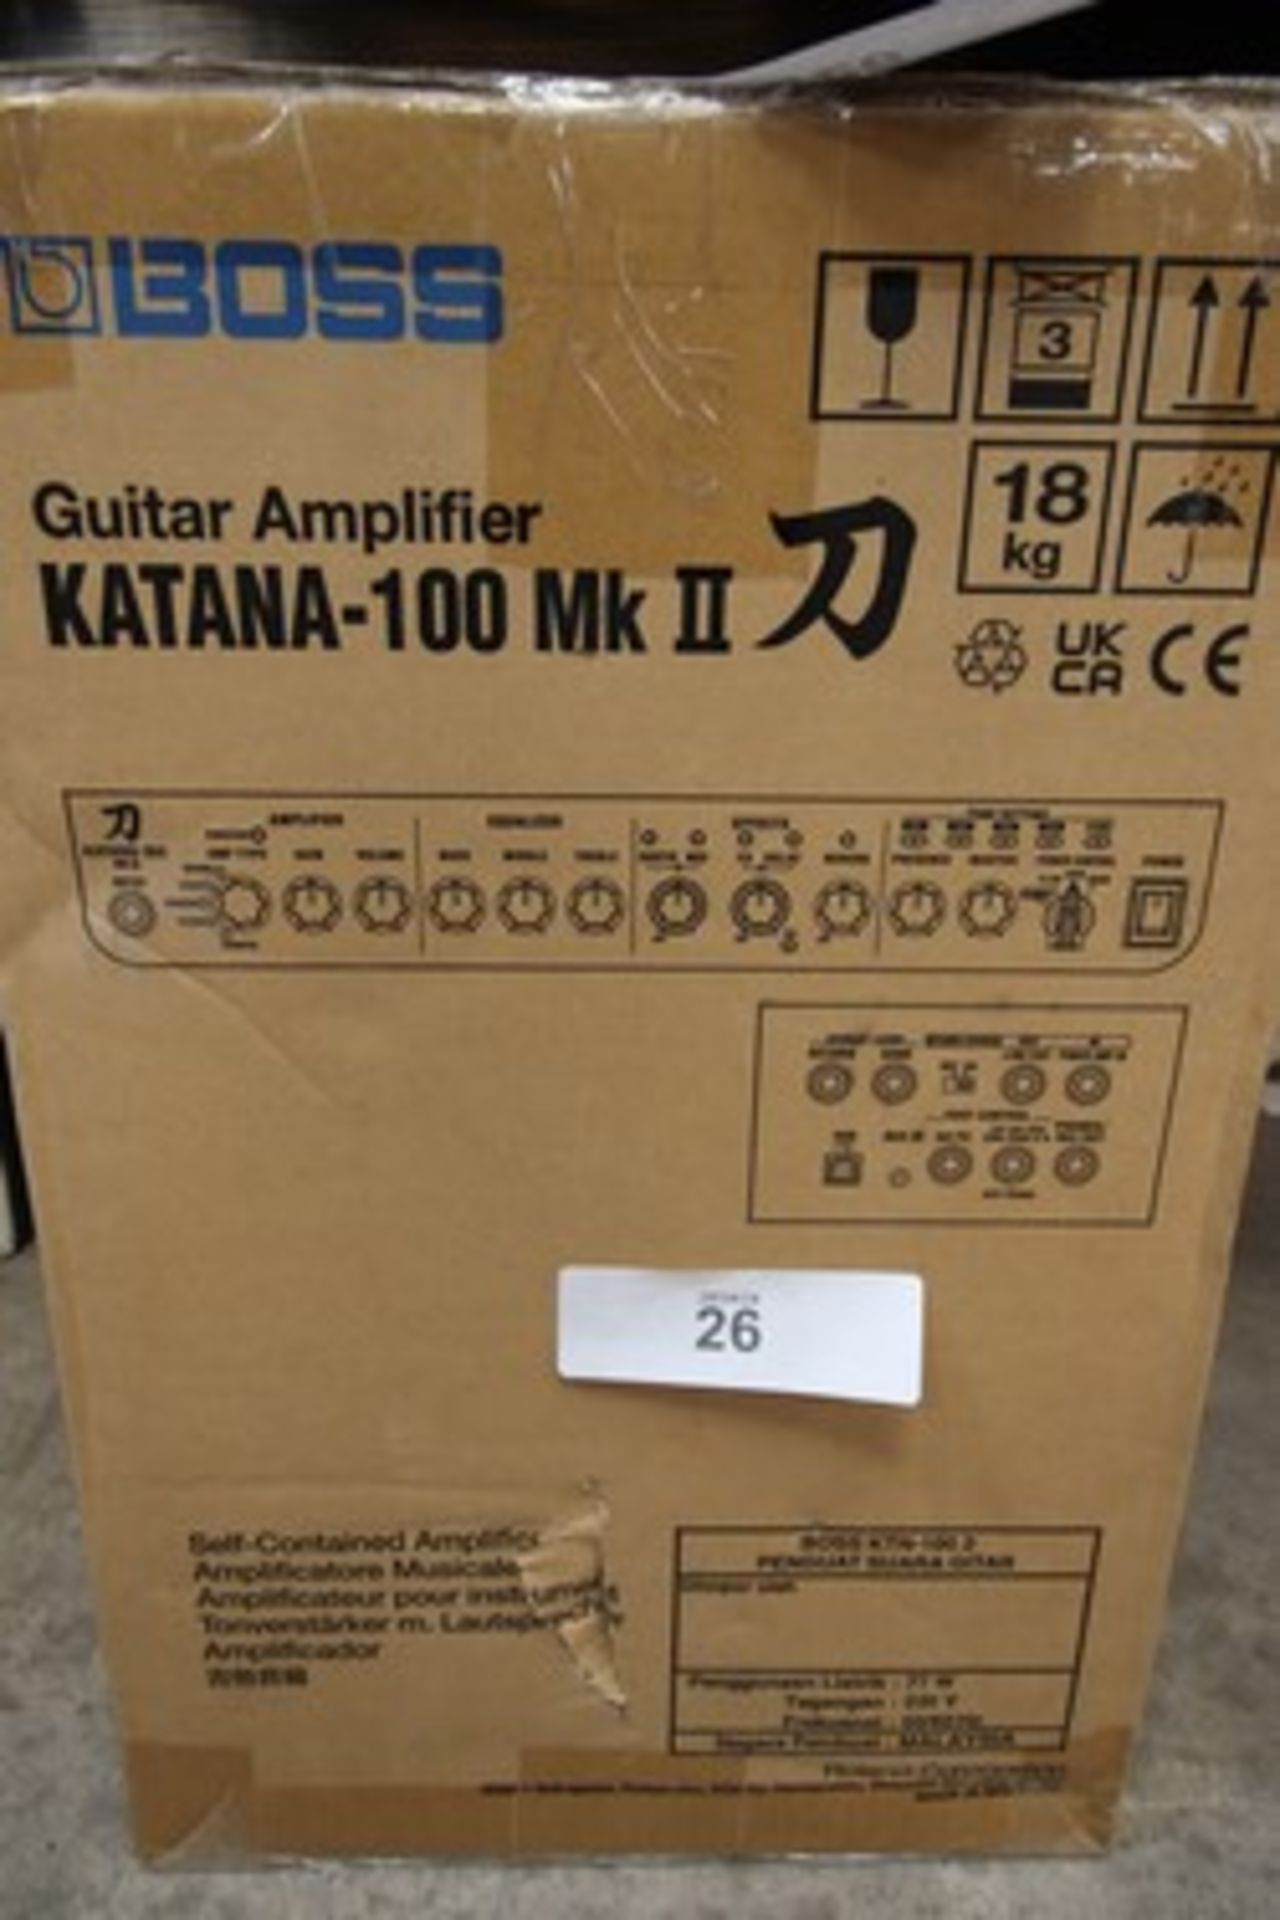 1 x Boss Katana-100 MK2 D guitar amplifier, model: KTN-1002 - sealed new in box (GS6) - Image 3 of 3